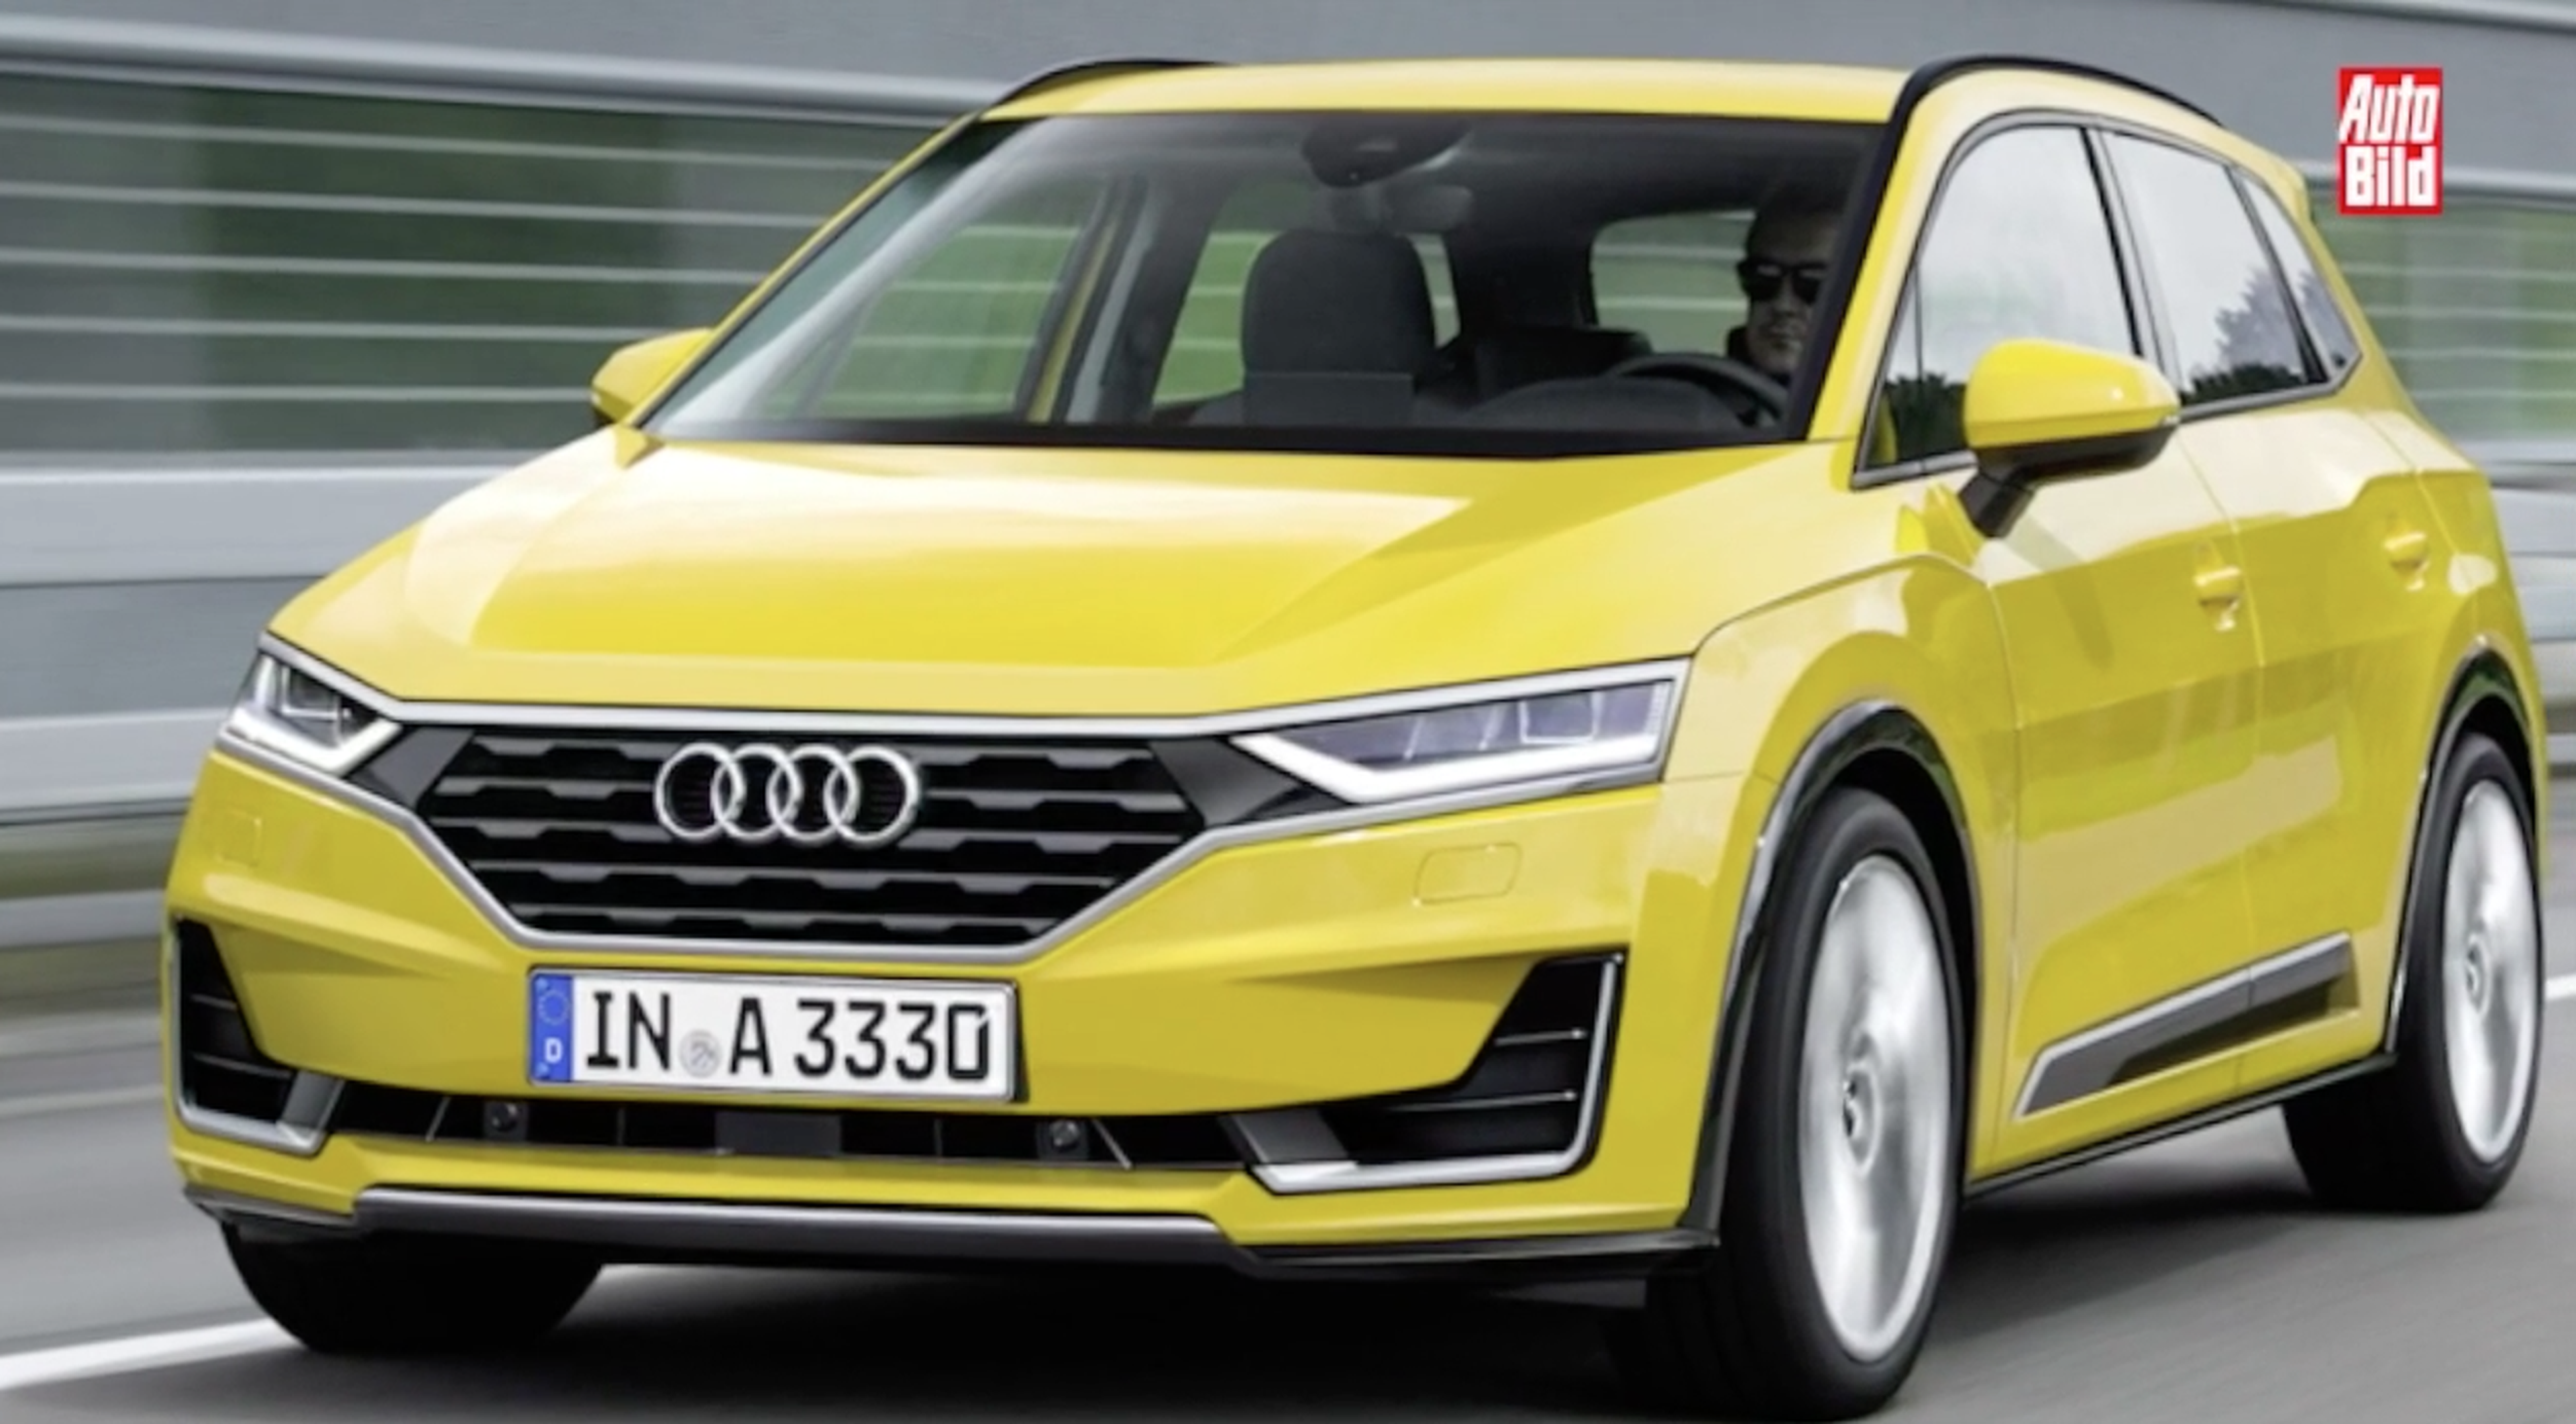 VÍDEO: Audi A3 Vario: datos del monovolumen compacto que planean